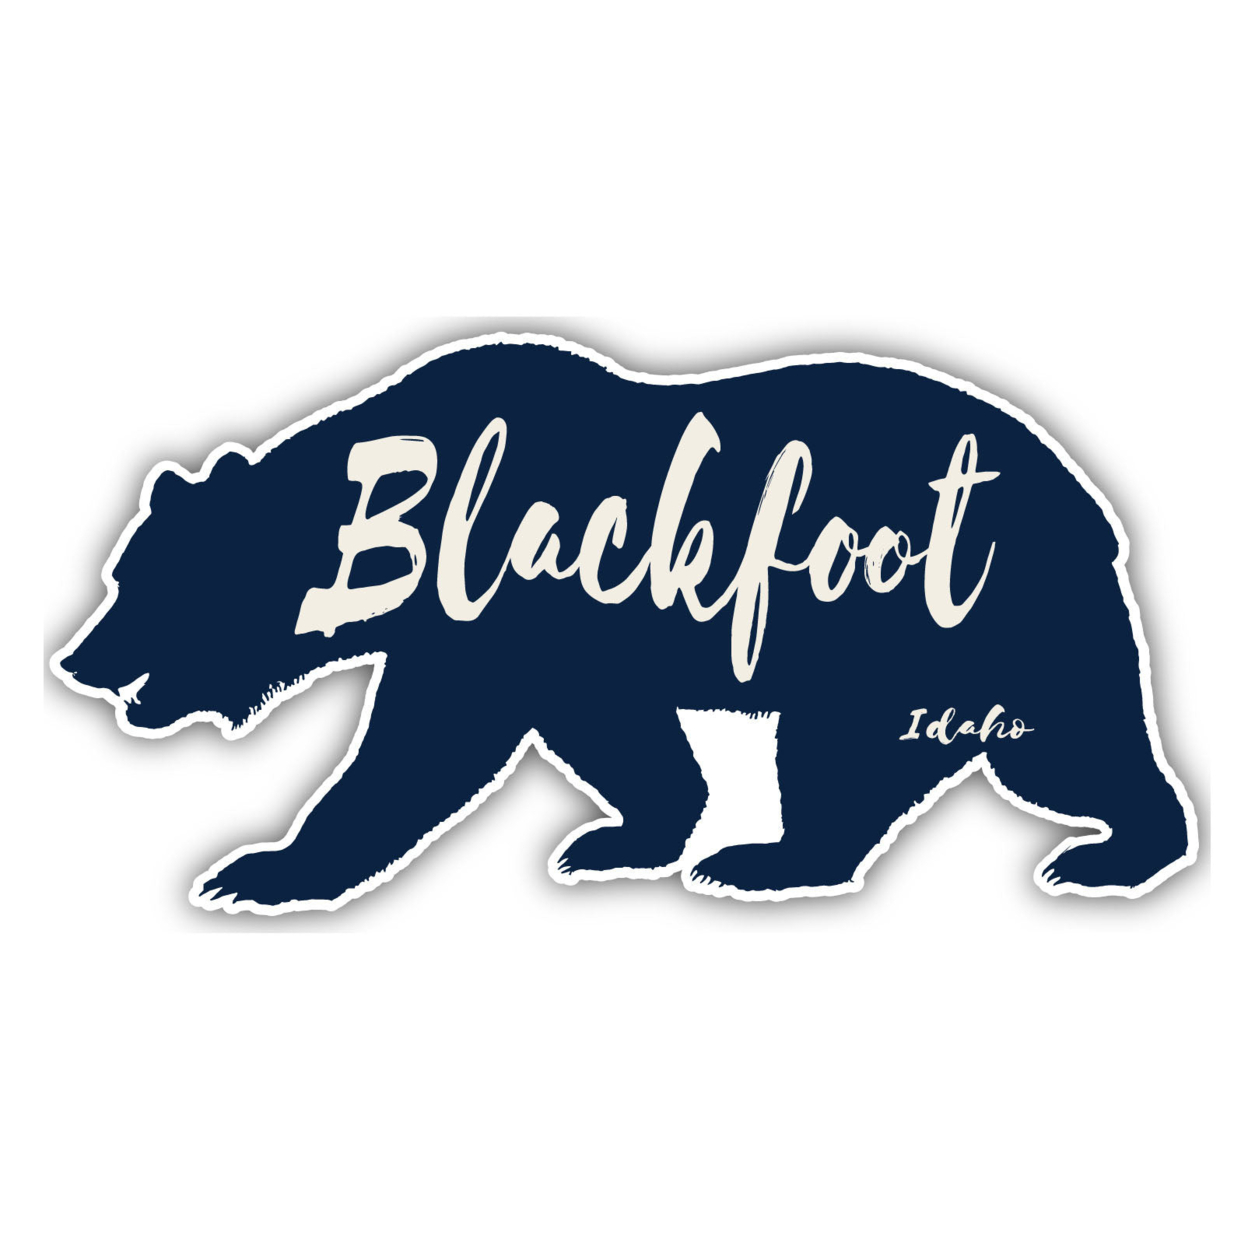 Blackfoot Idaho Souvenir Decorative Stickers (Choose Theme And Size) - Single Unit, 2-Inch, Camp Life